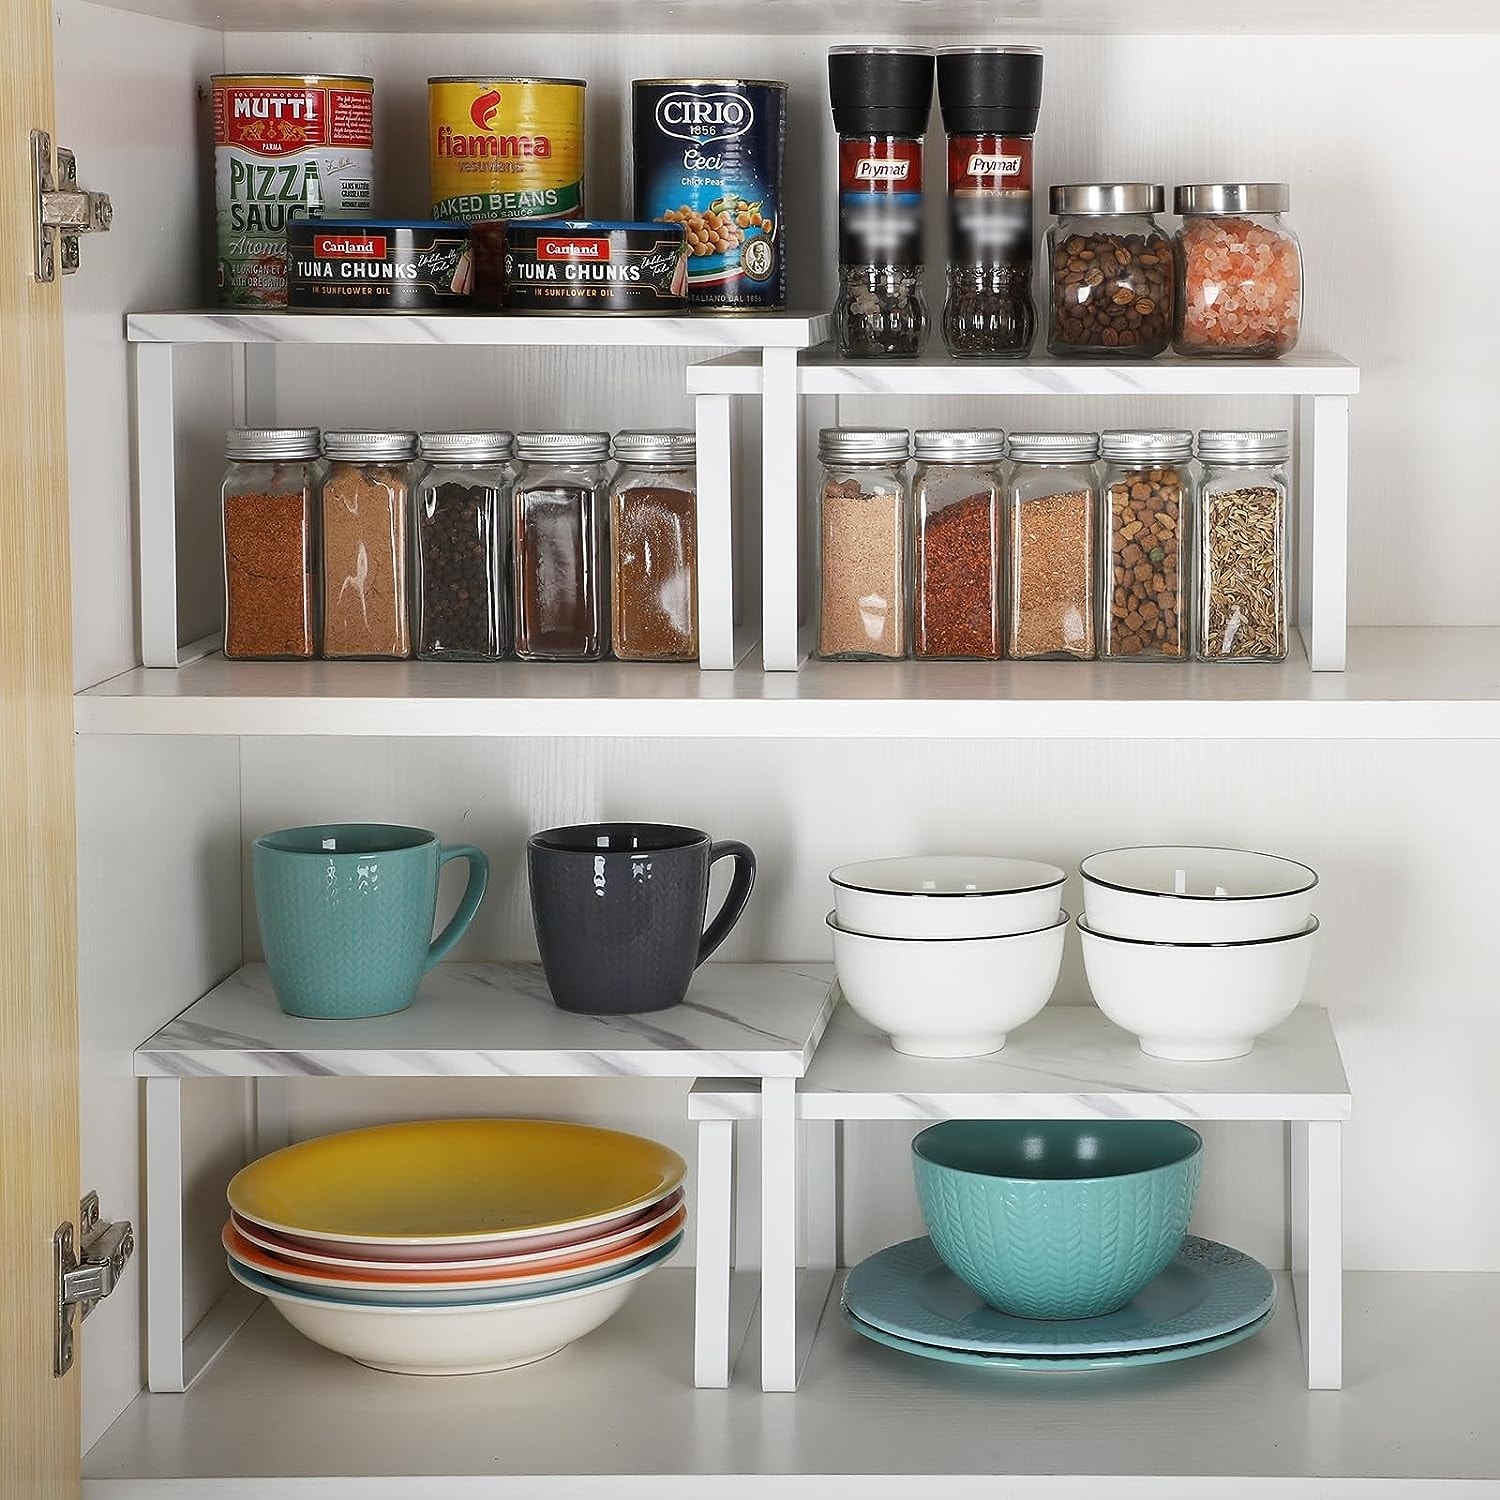 Stackable Cabinet Shelf Kitchen Cabinet Organizers and Storage